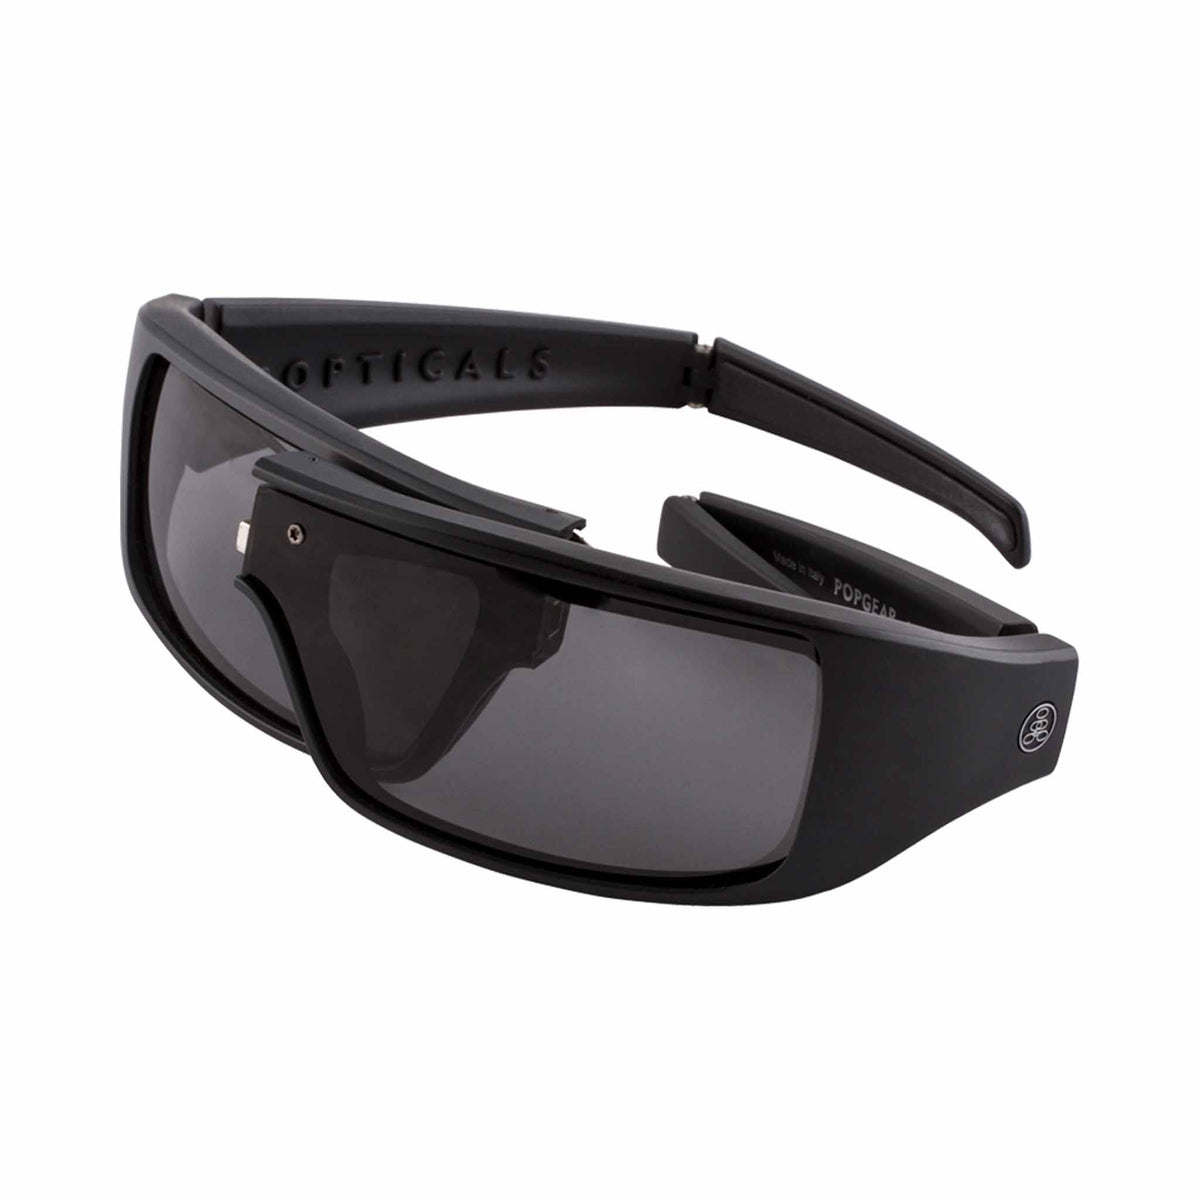 Popticals, Premium Compact Sunglasses, PopGear, 010050-BMGS, Standard Sunglasses, Matte Black Frames, Gray Lenses, Spider View